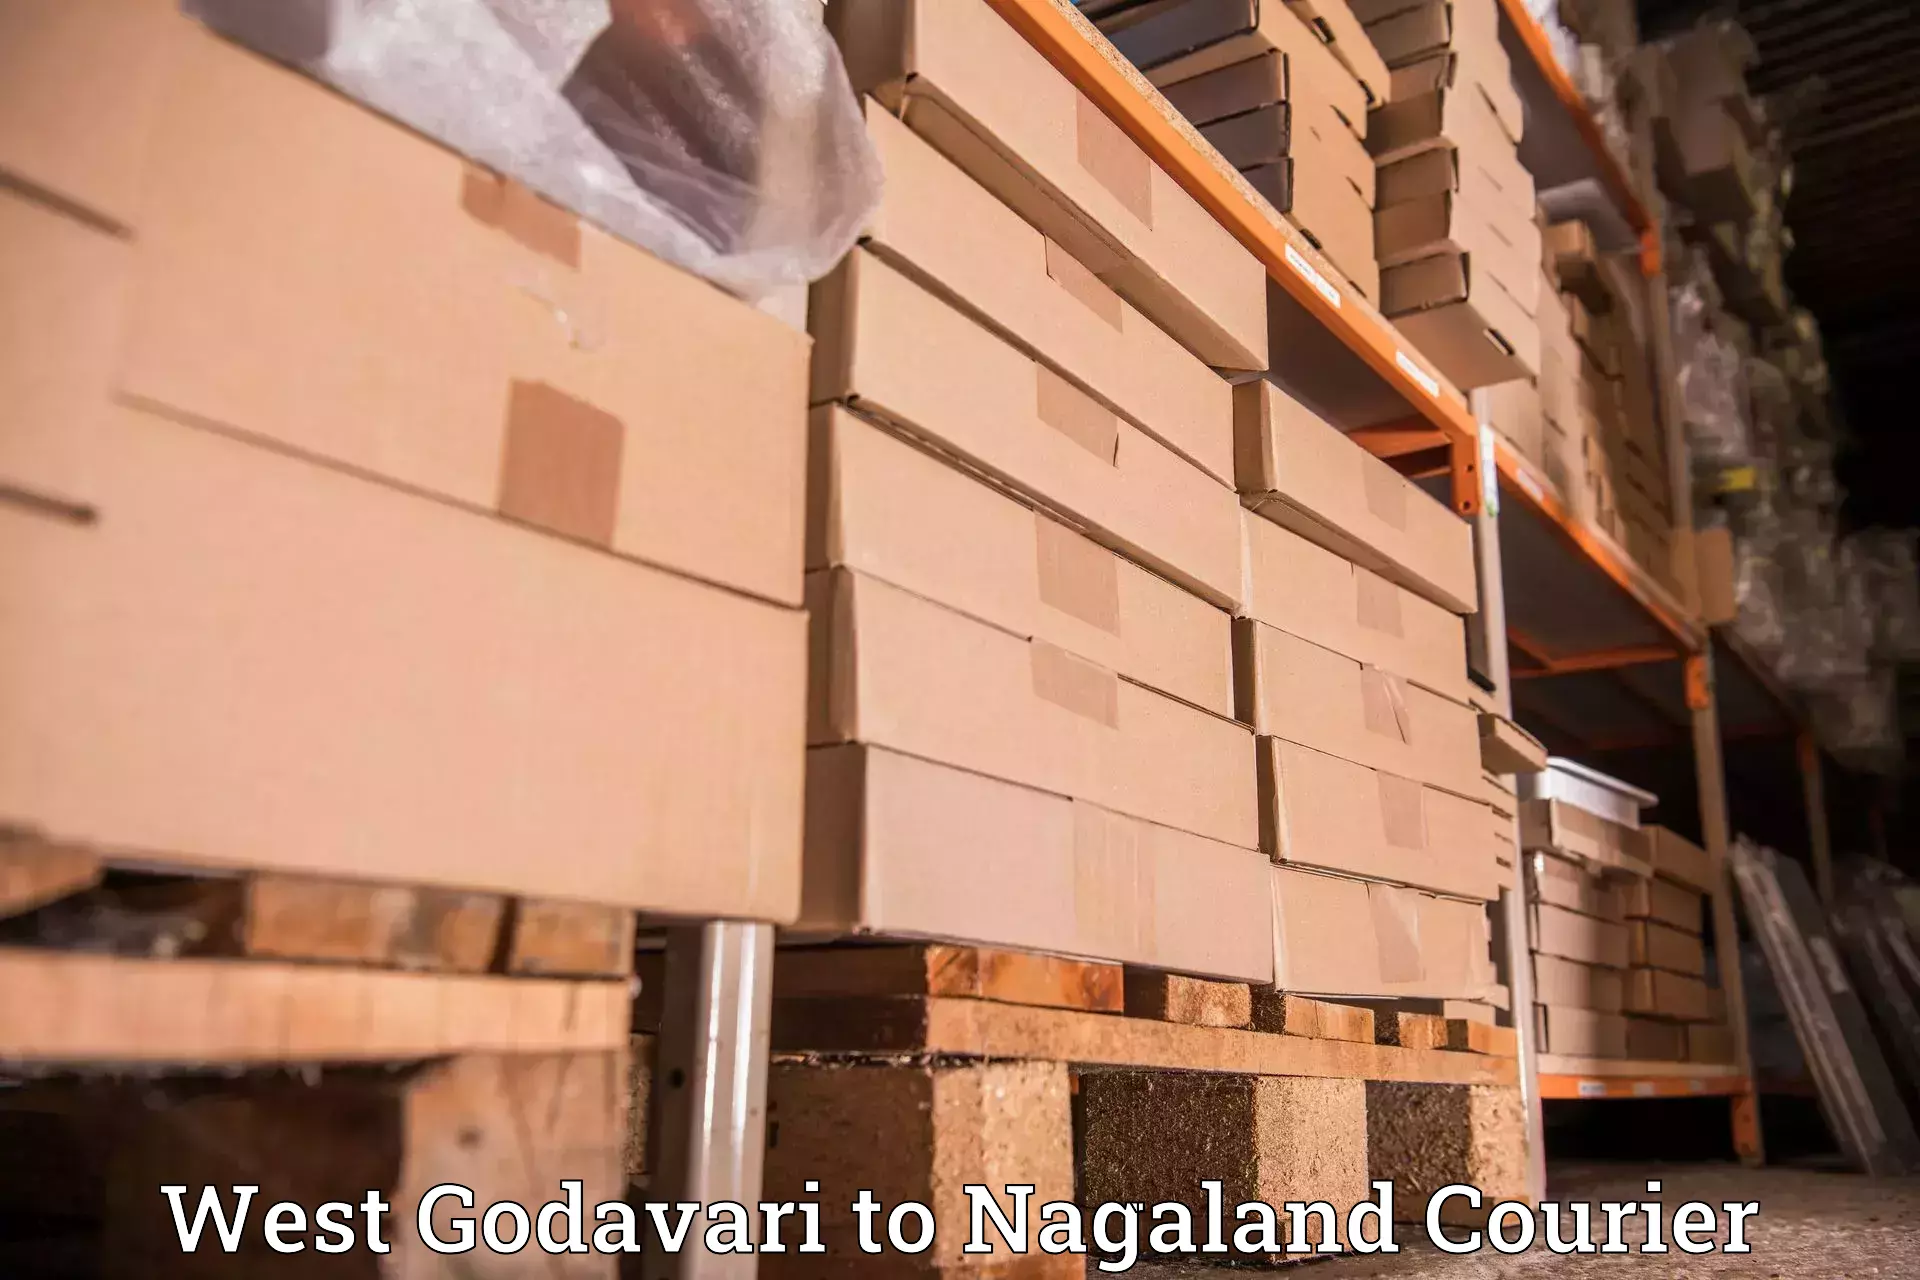 Professional courier handling West Godavari to Nagaland